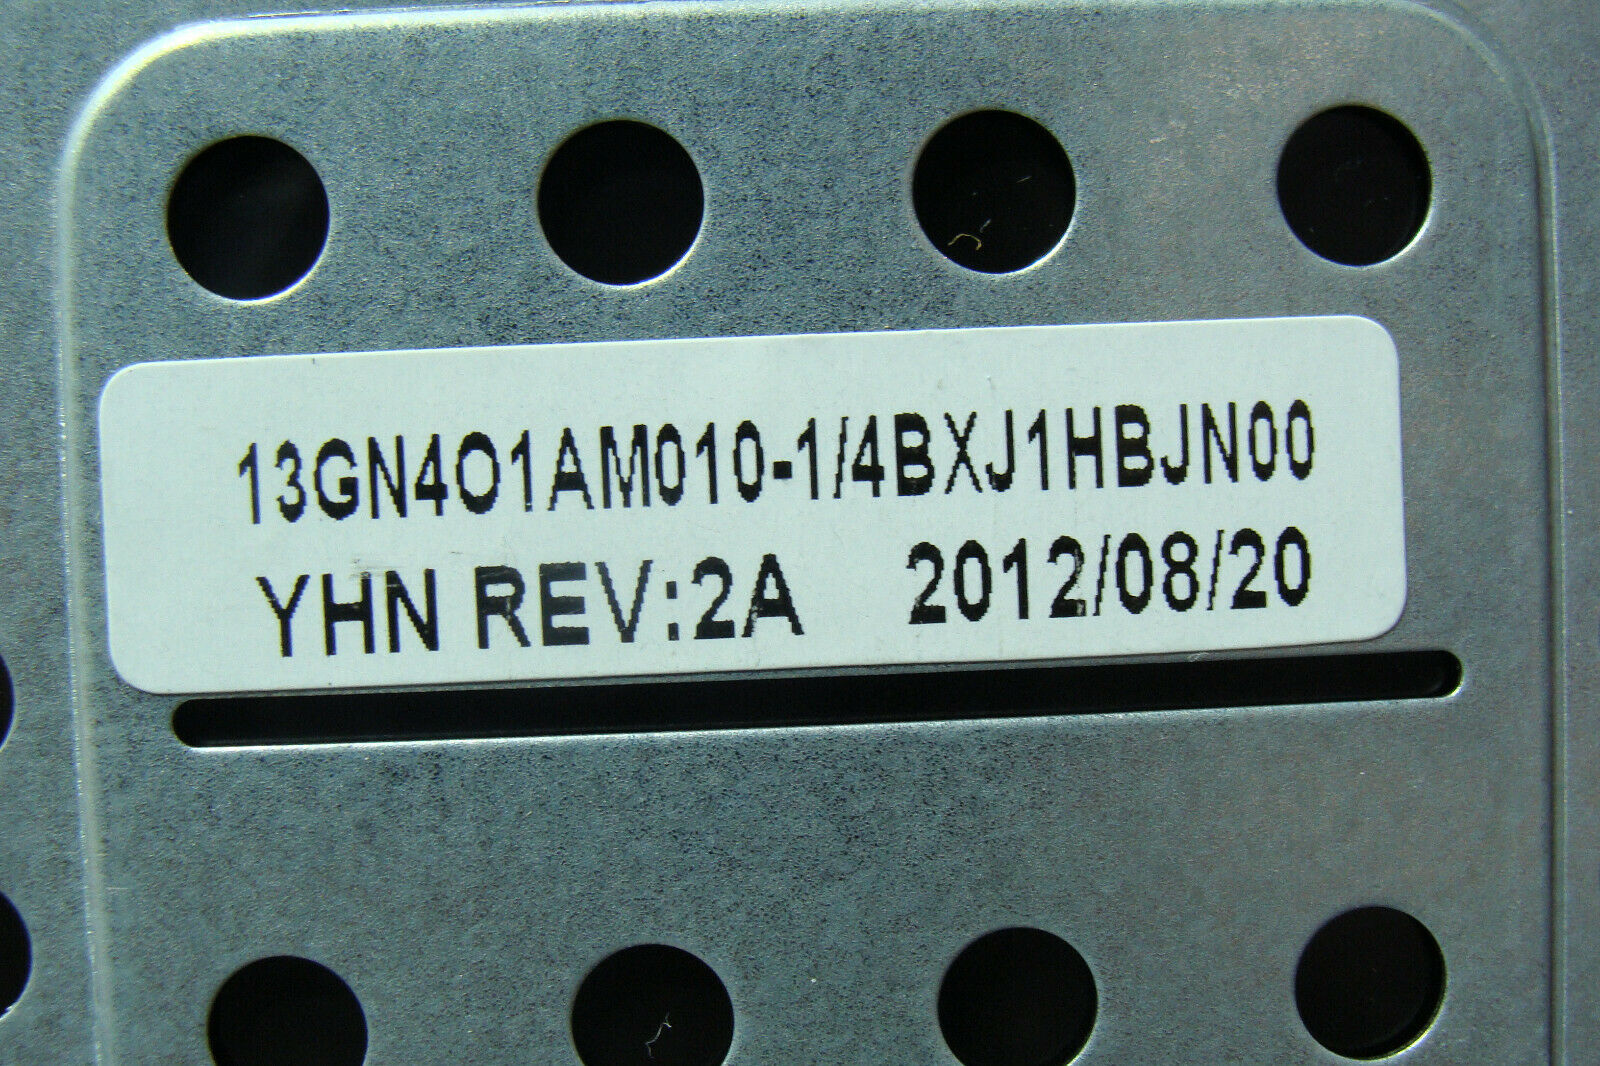 Asus X501A-RH31 15.6